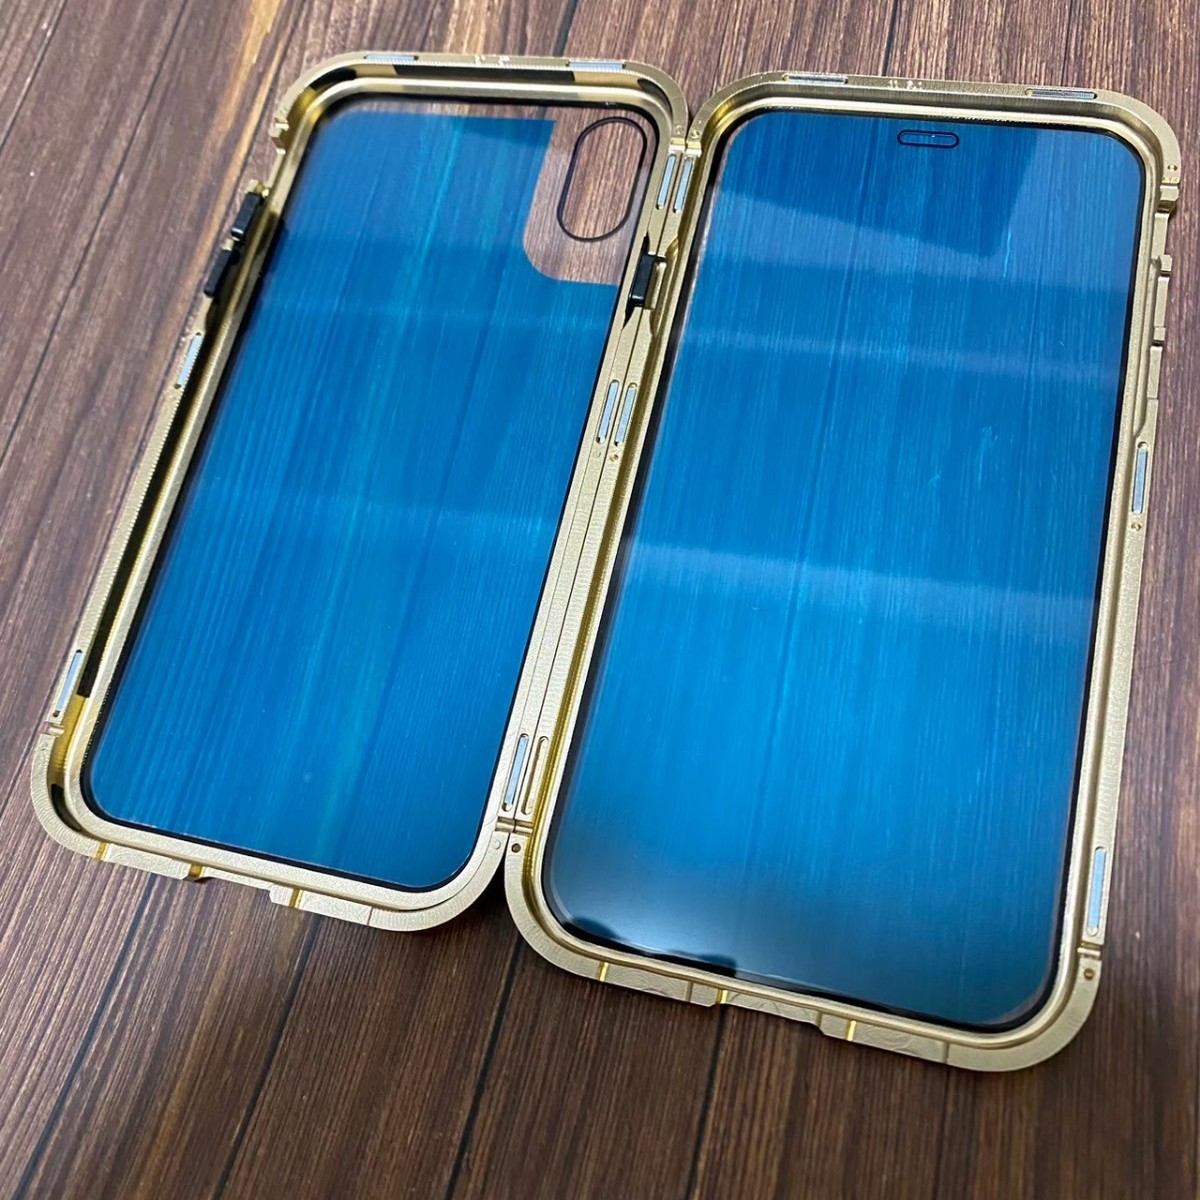 iPhoneケース ガラスケース iPhoneカバー 両面ガラス 全面カバー iPhoneXR 透明ケース クリアケース アイホンケース バンパーゴールド